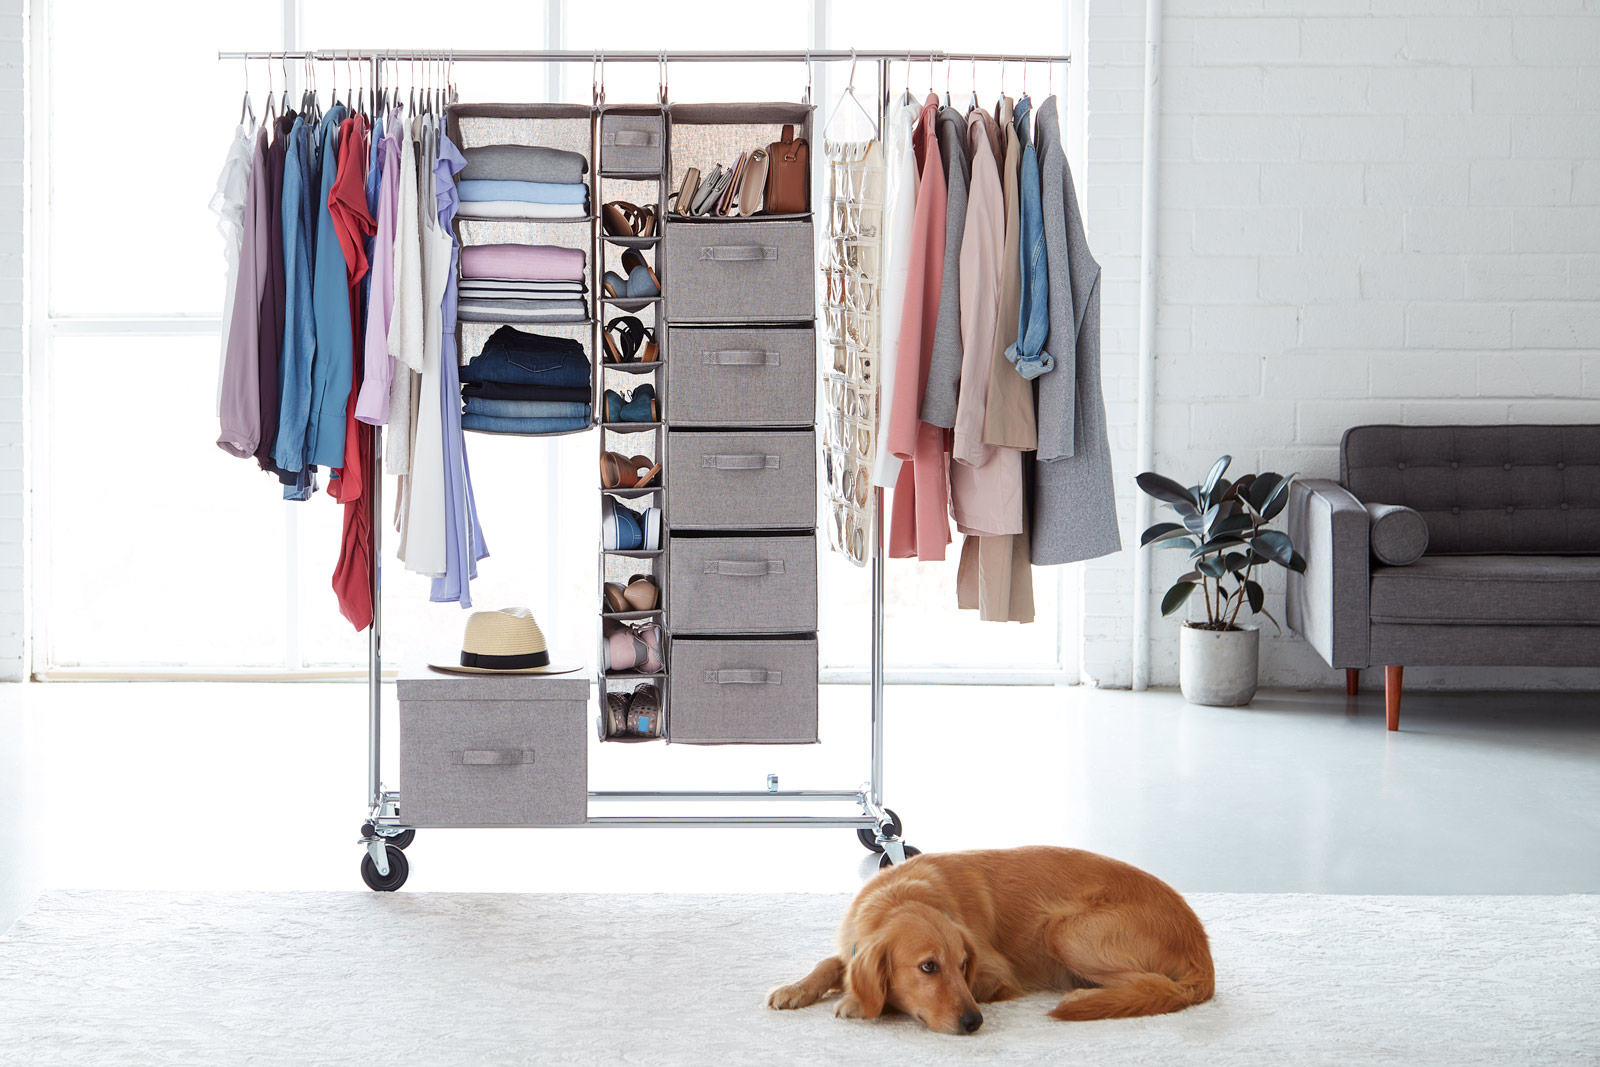 No dresser, No Problem! Hang your organized clothes from the closet!  @emmygoesplaces #closet #travel #travelhack #luggage